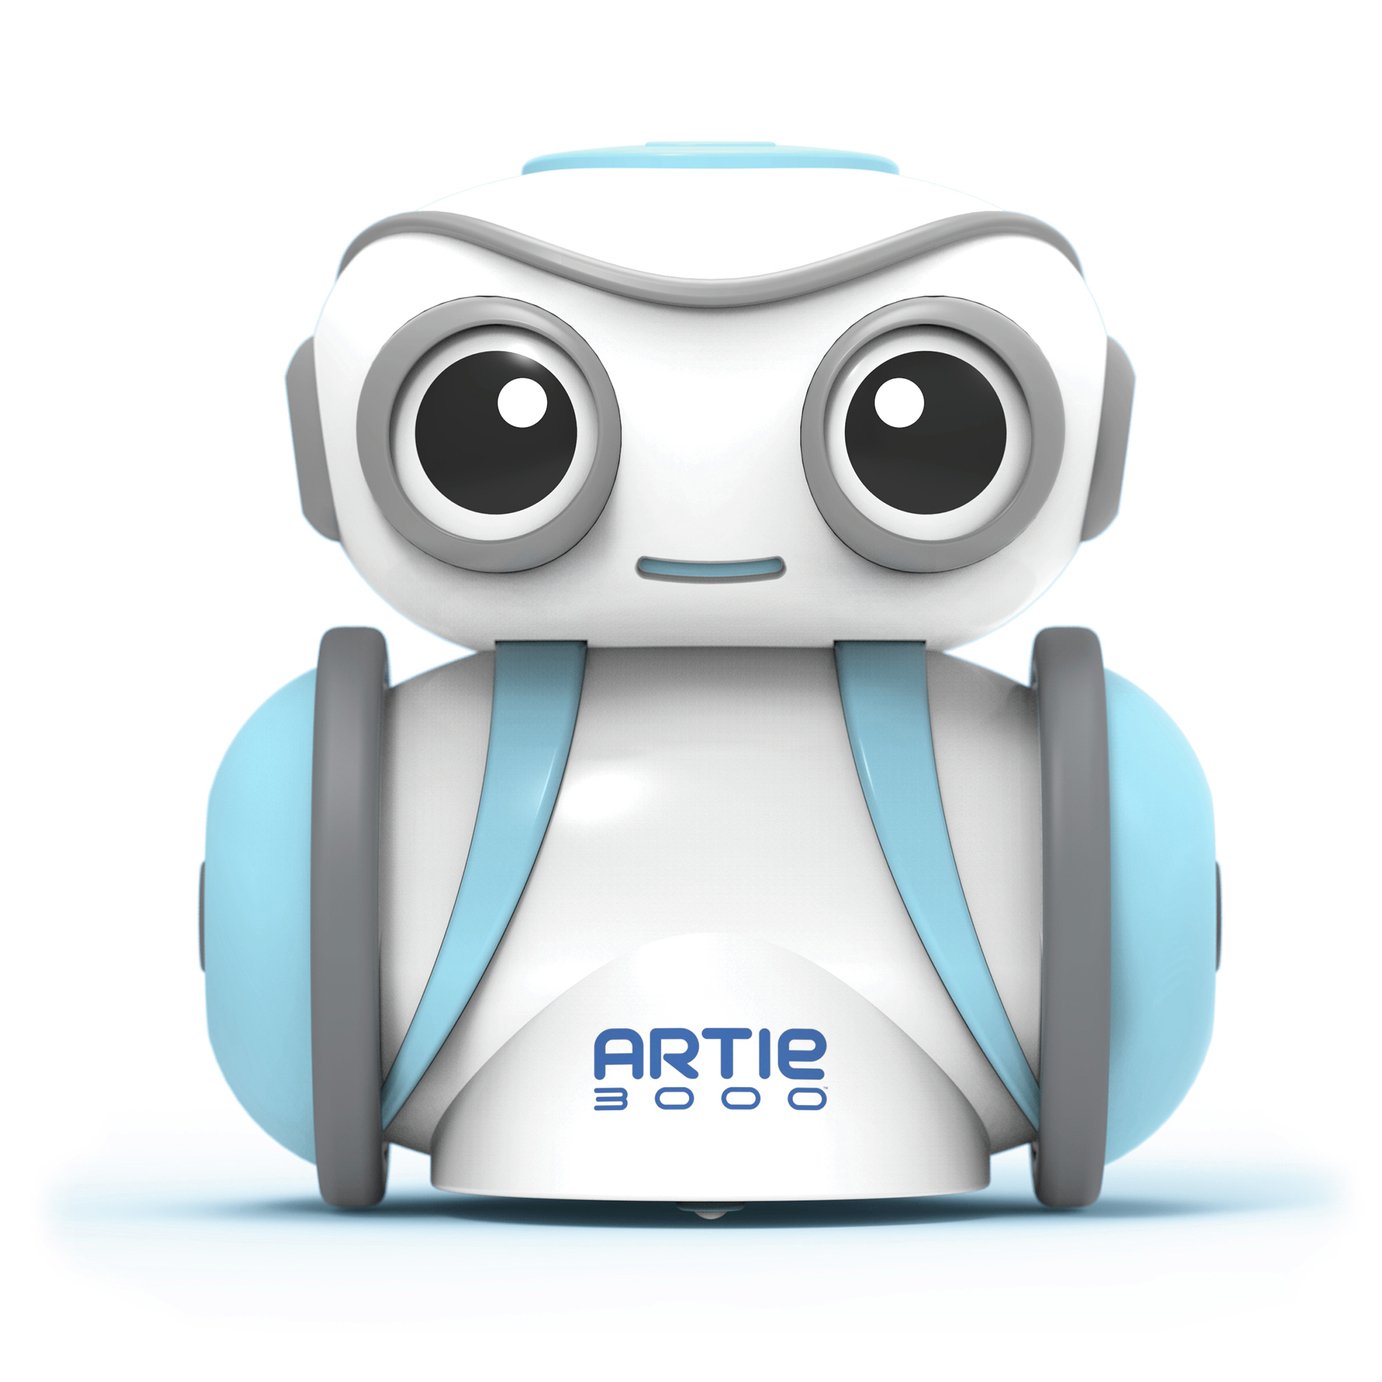 Artie 3000 Robot Review